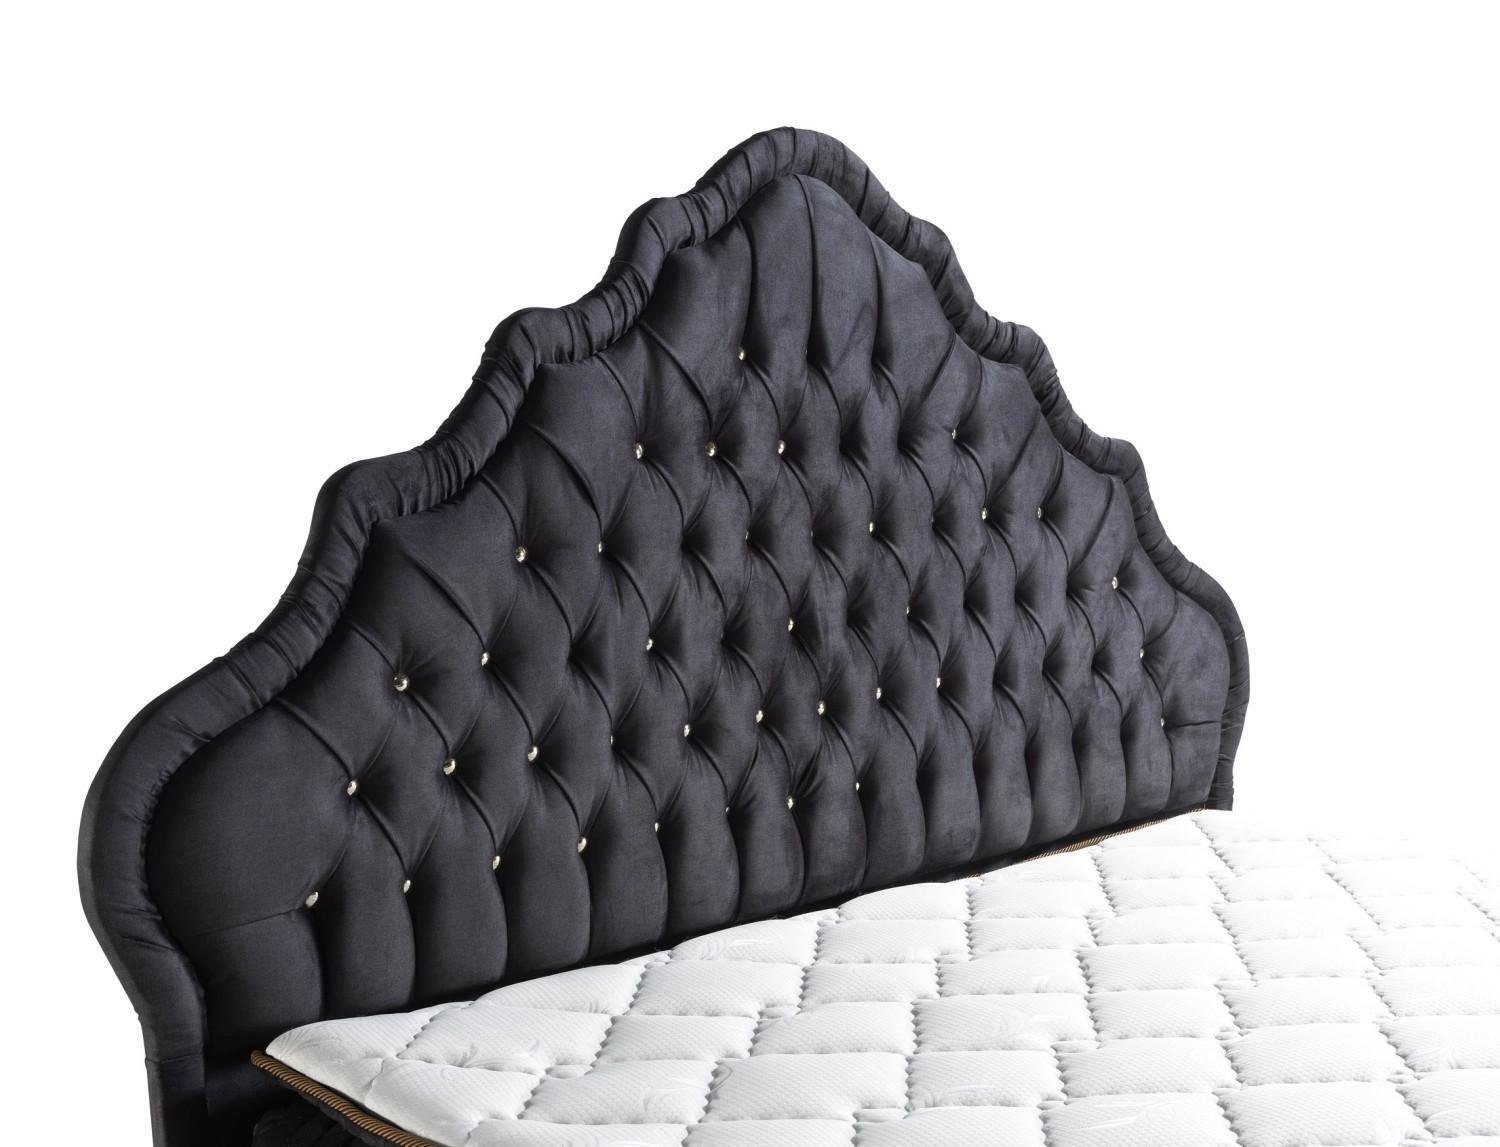 Möbel Made Luxus In (Bett), Europe Polster Schwarz Bett Schlafzimmer JVmoebel Betten Bett Design